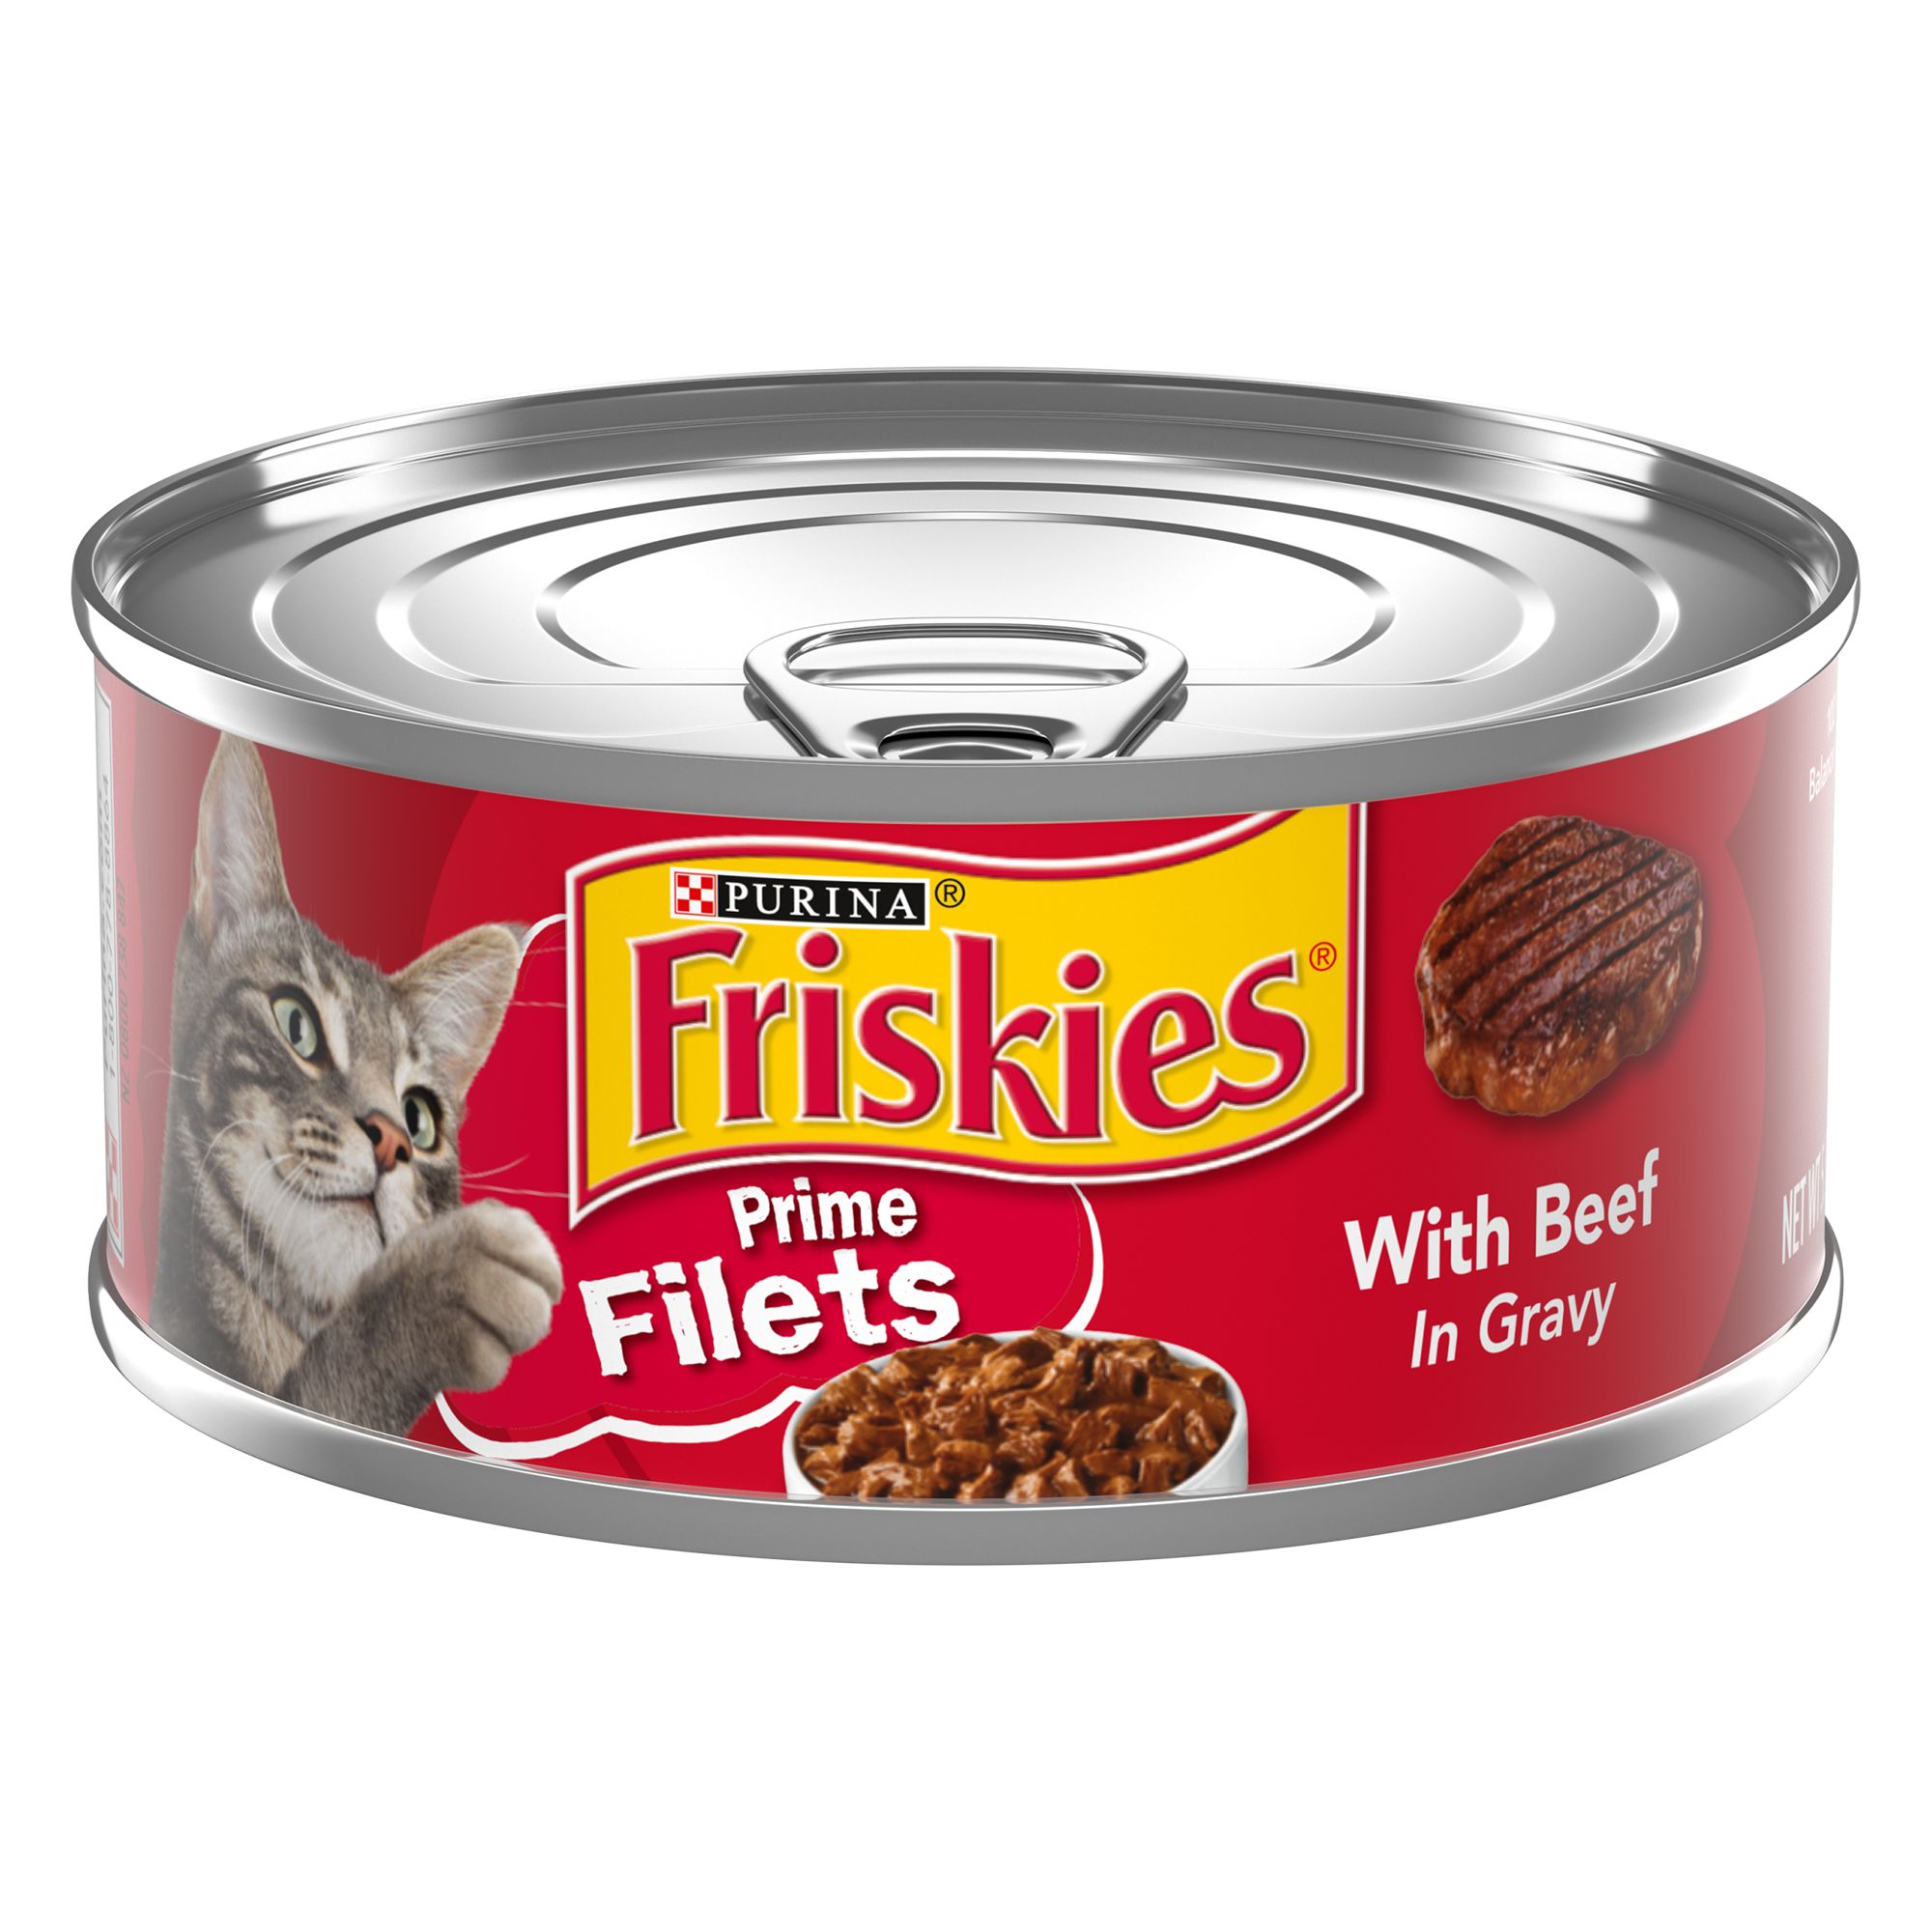 Pet Supplies, Dog and Cat Food & Treats